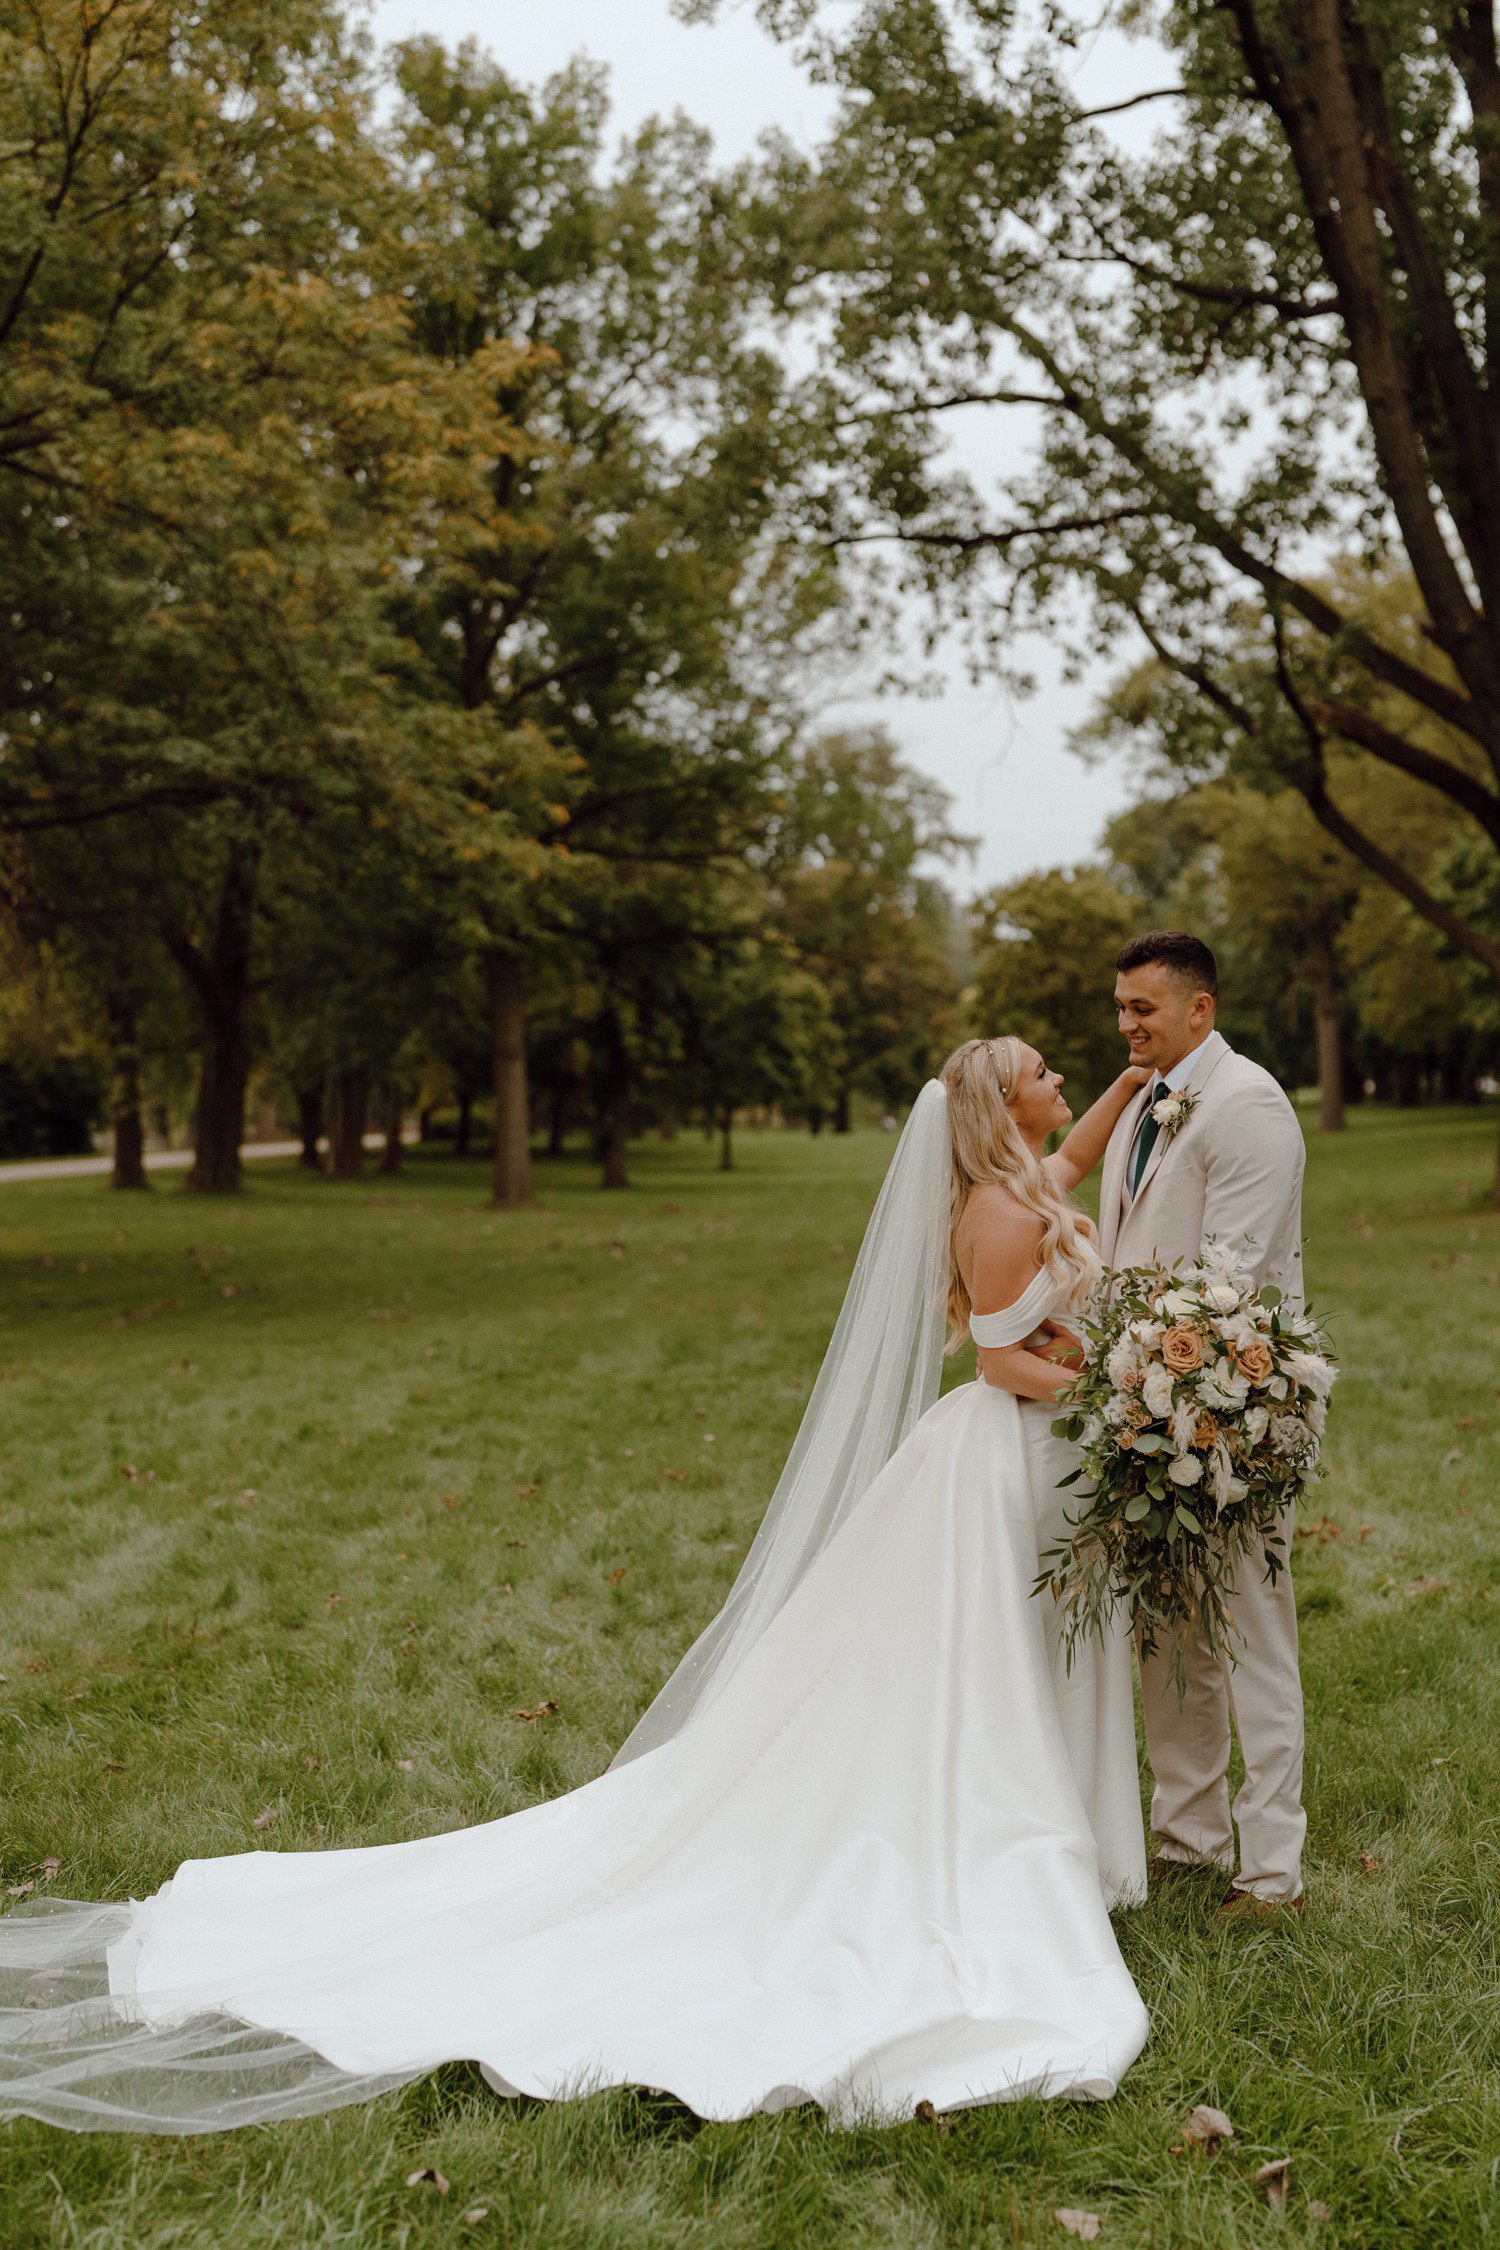 Grand Rapids wedding photos in September.